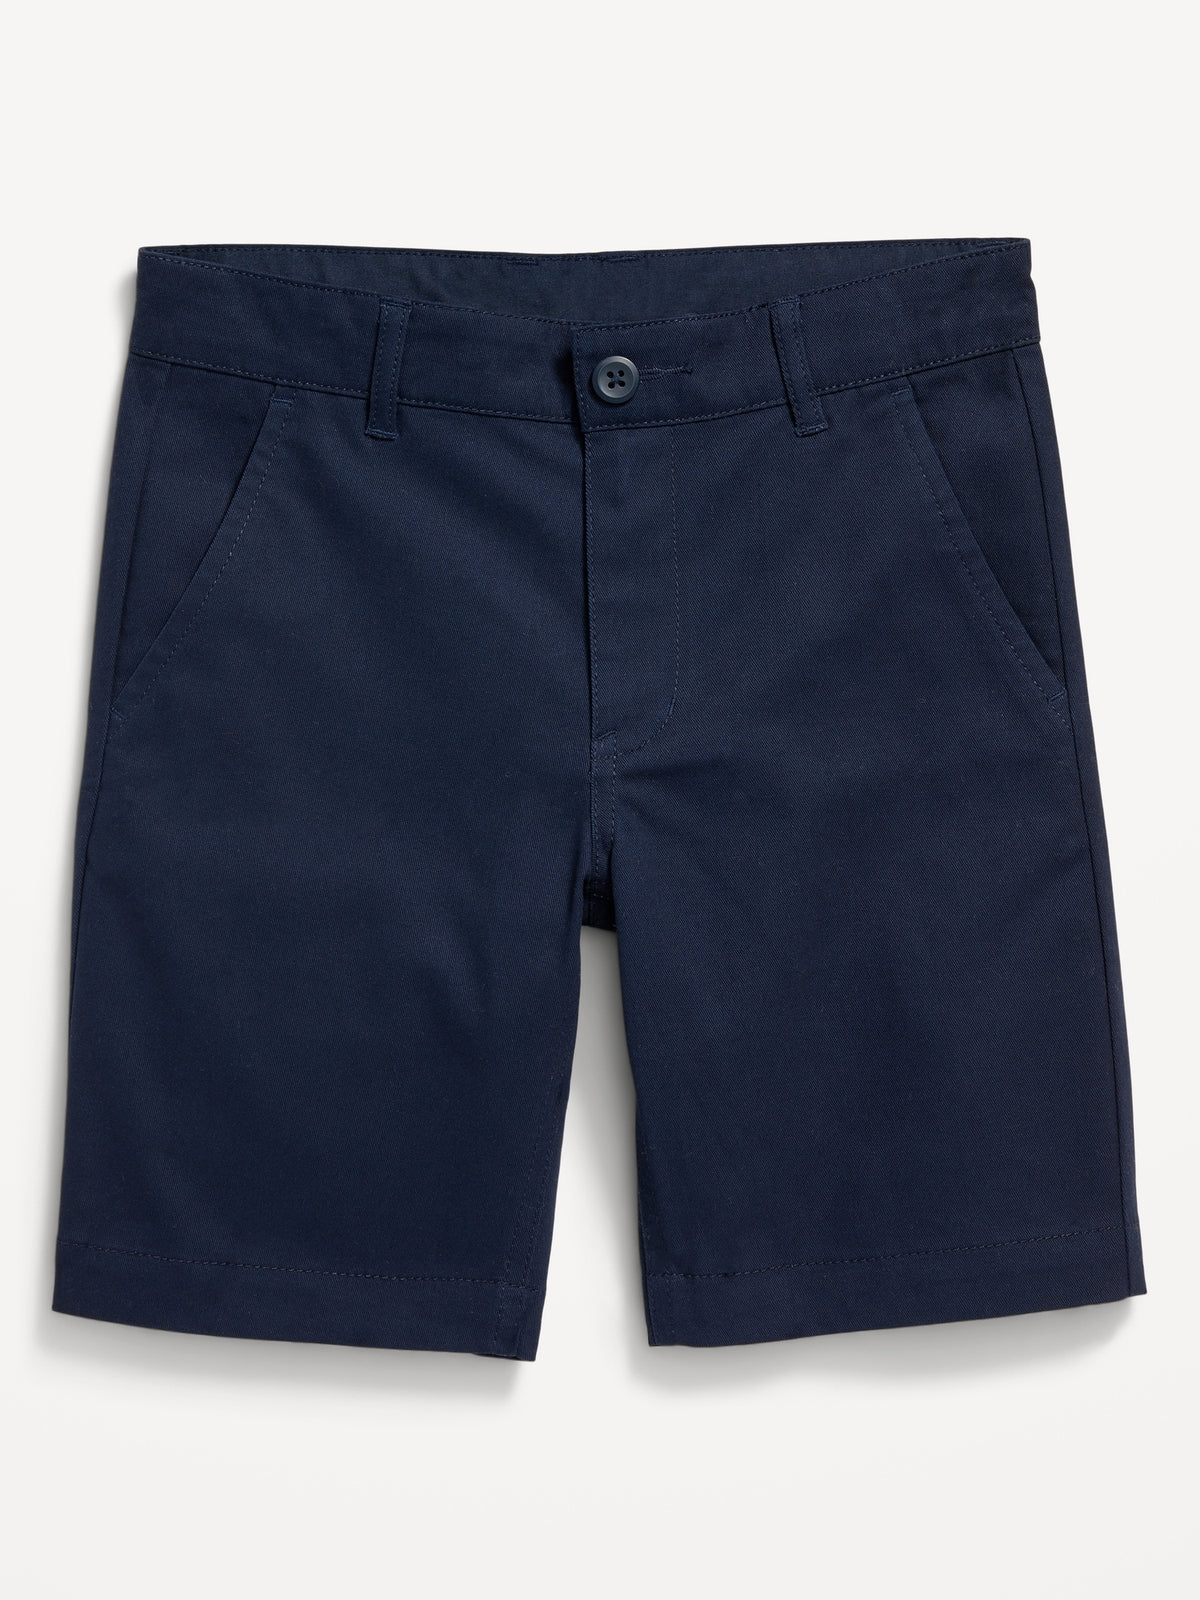 Built-In Flex Twill School Uniform Shorts for Boys (At Knee)